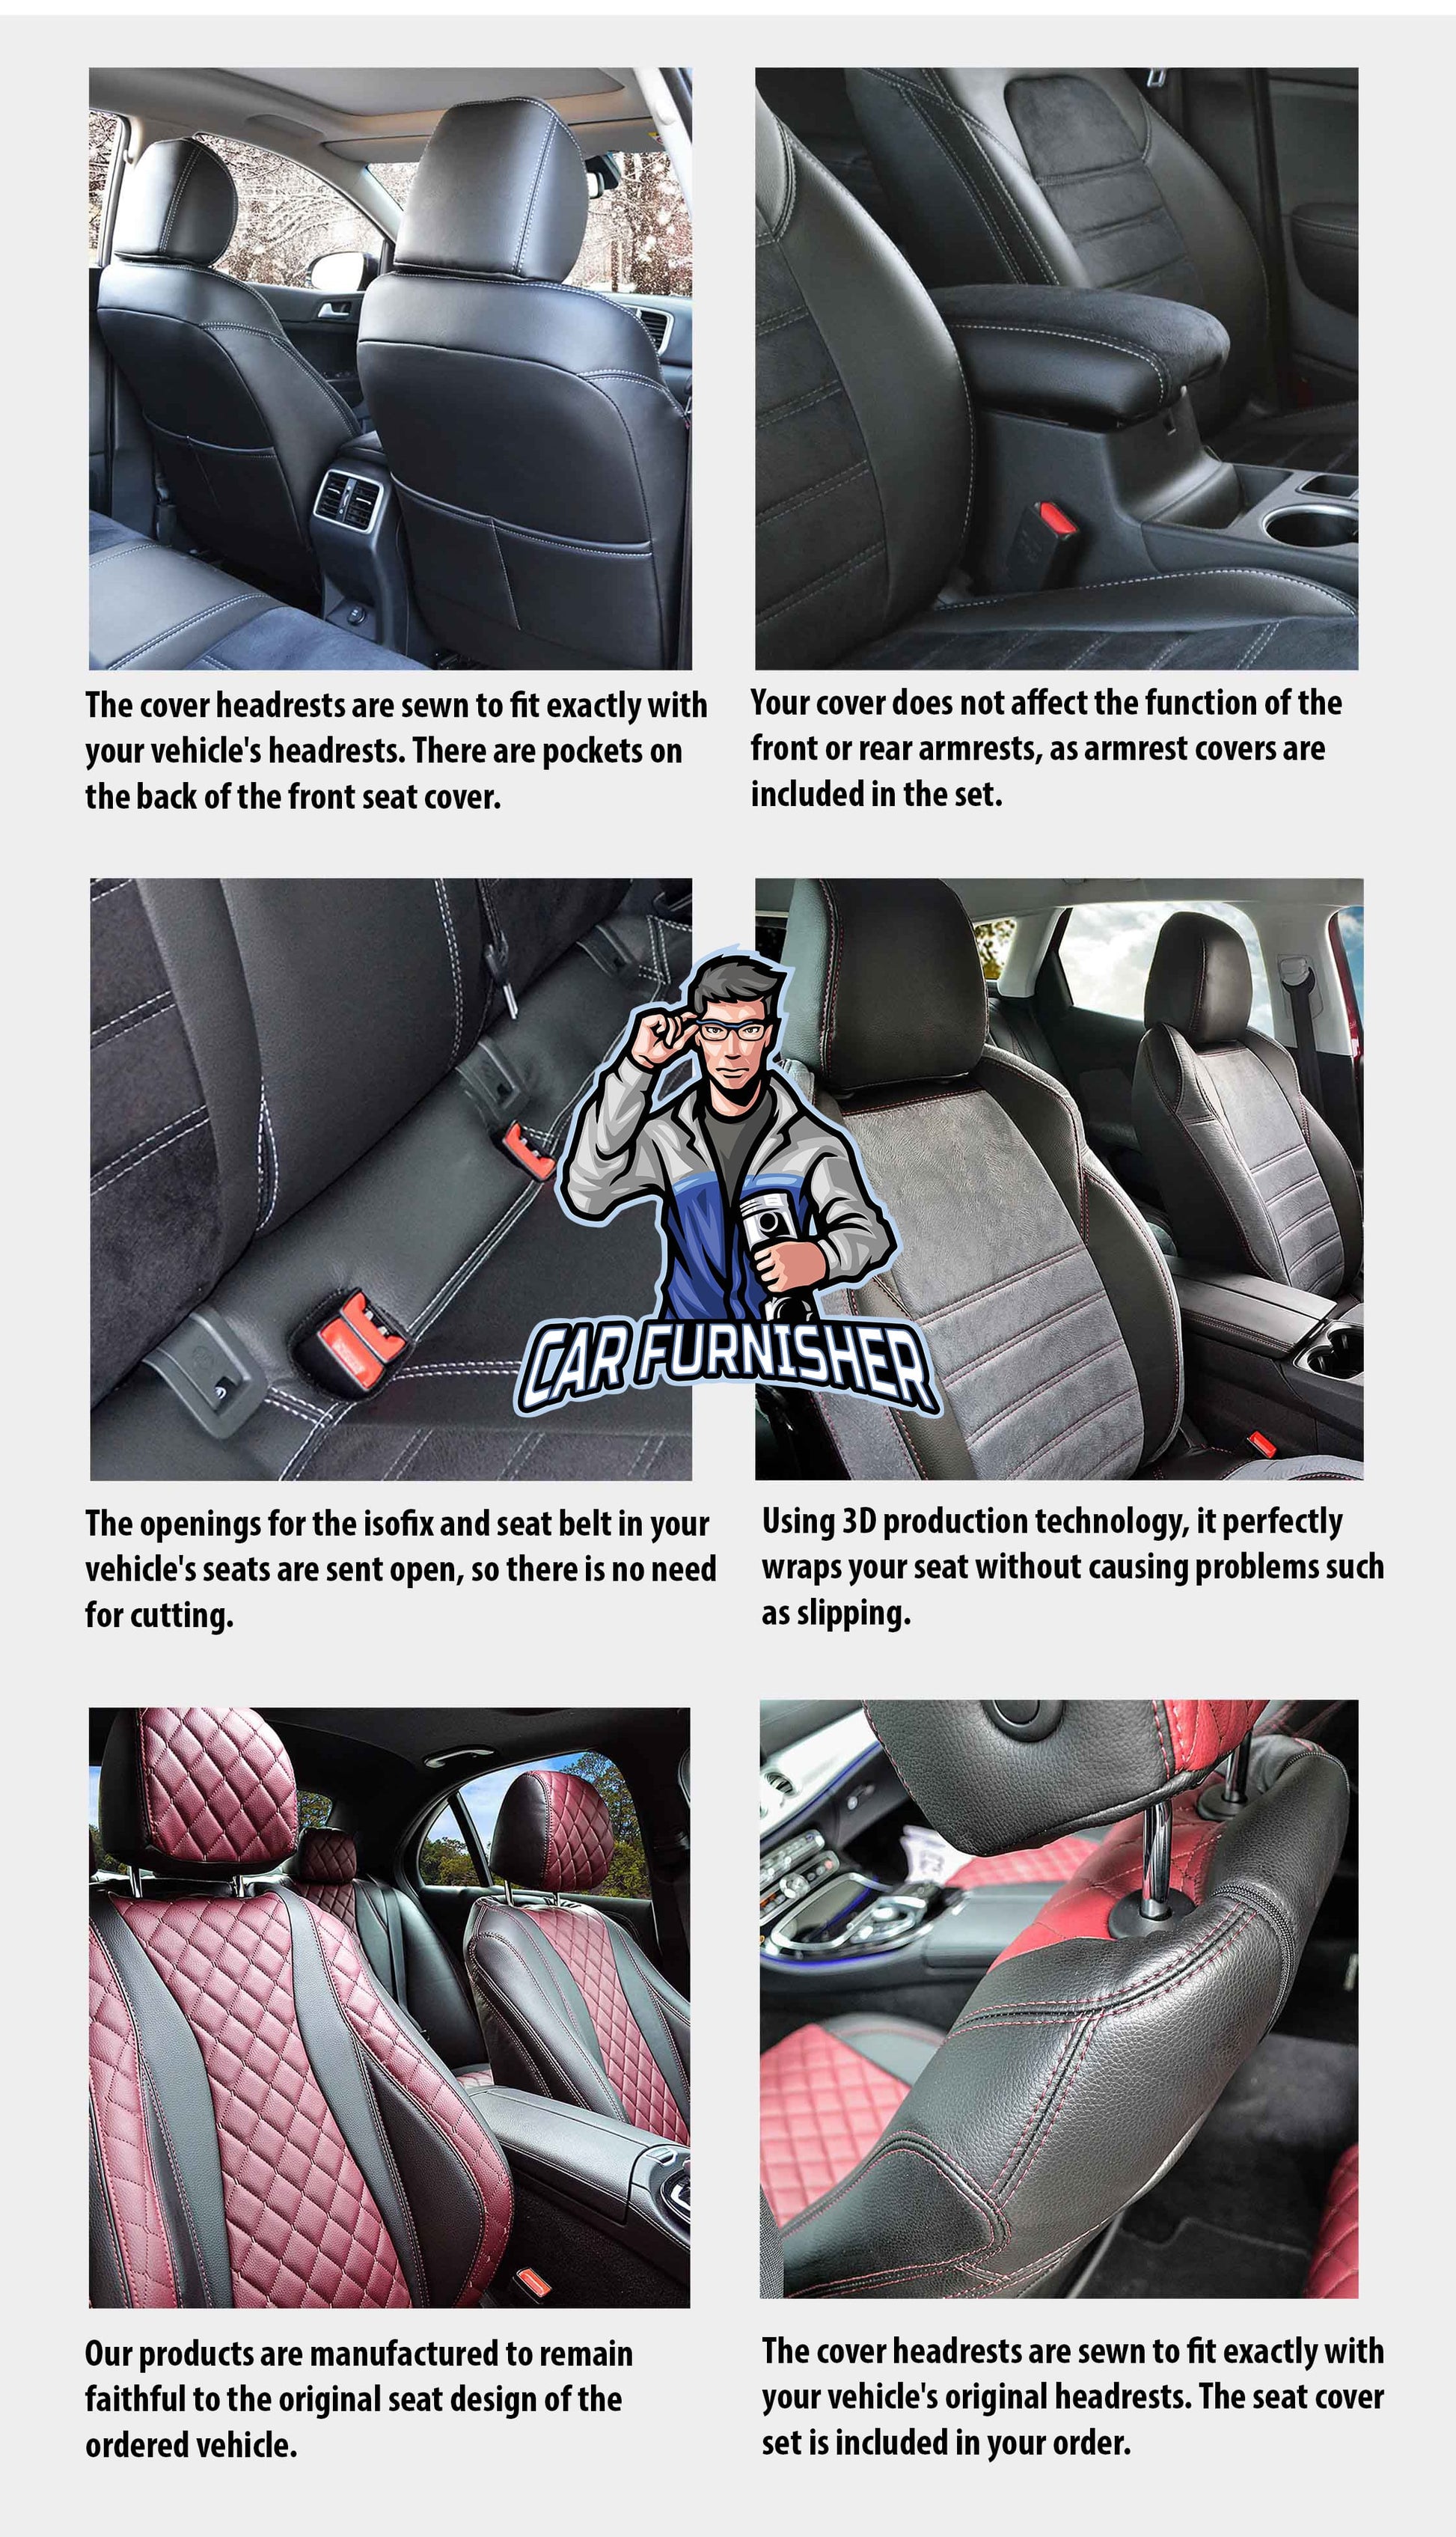 Toyota Hilux Seat Cover Camouflage Waterproof Design Sierra Camo Waterproof Fabric